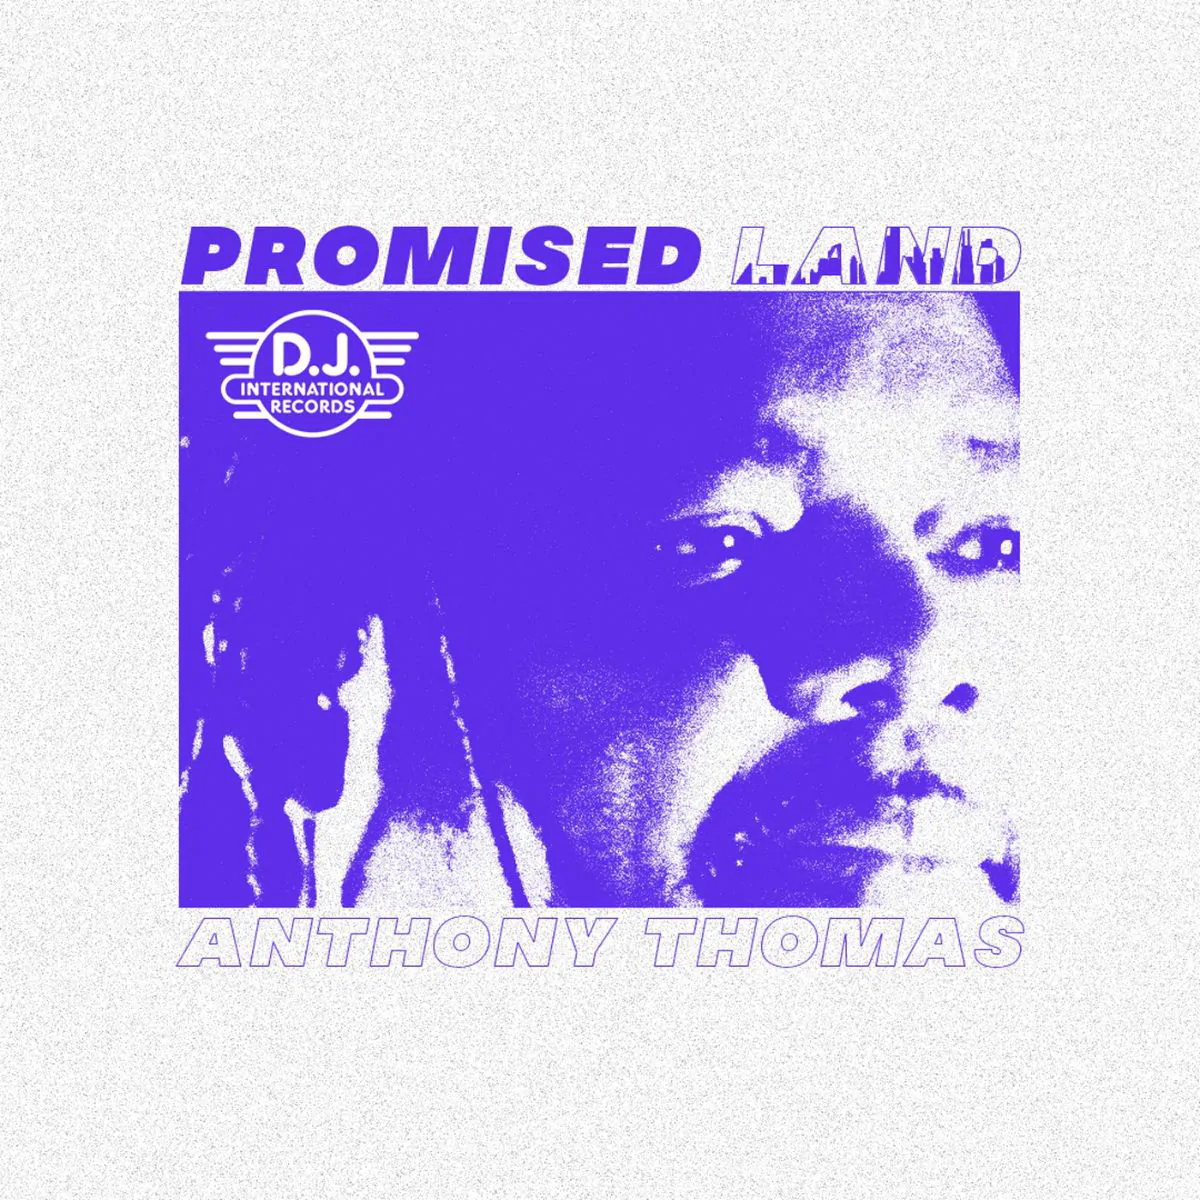 Iconic 80’s Chicago House Label DJ INTERNATIONAL Relaunches With Anthony Thomas’ ‘Promised Land’